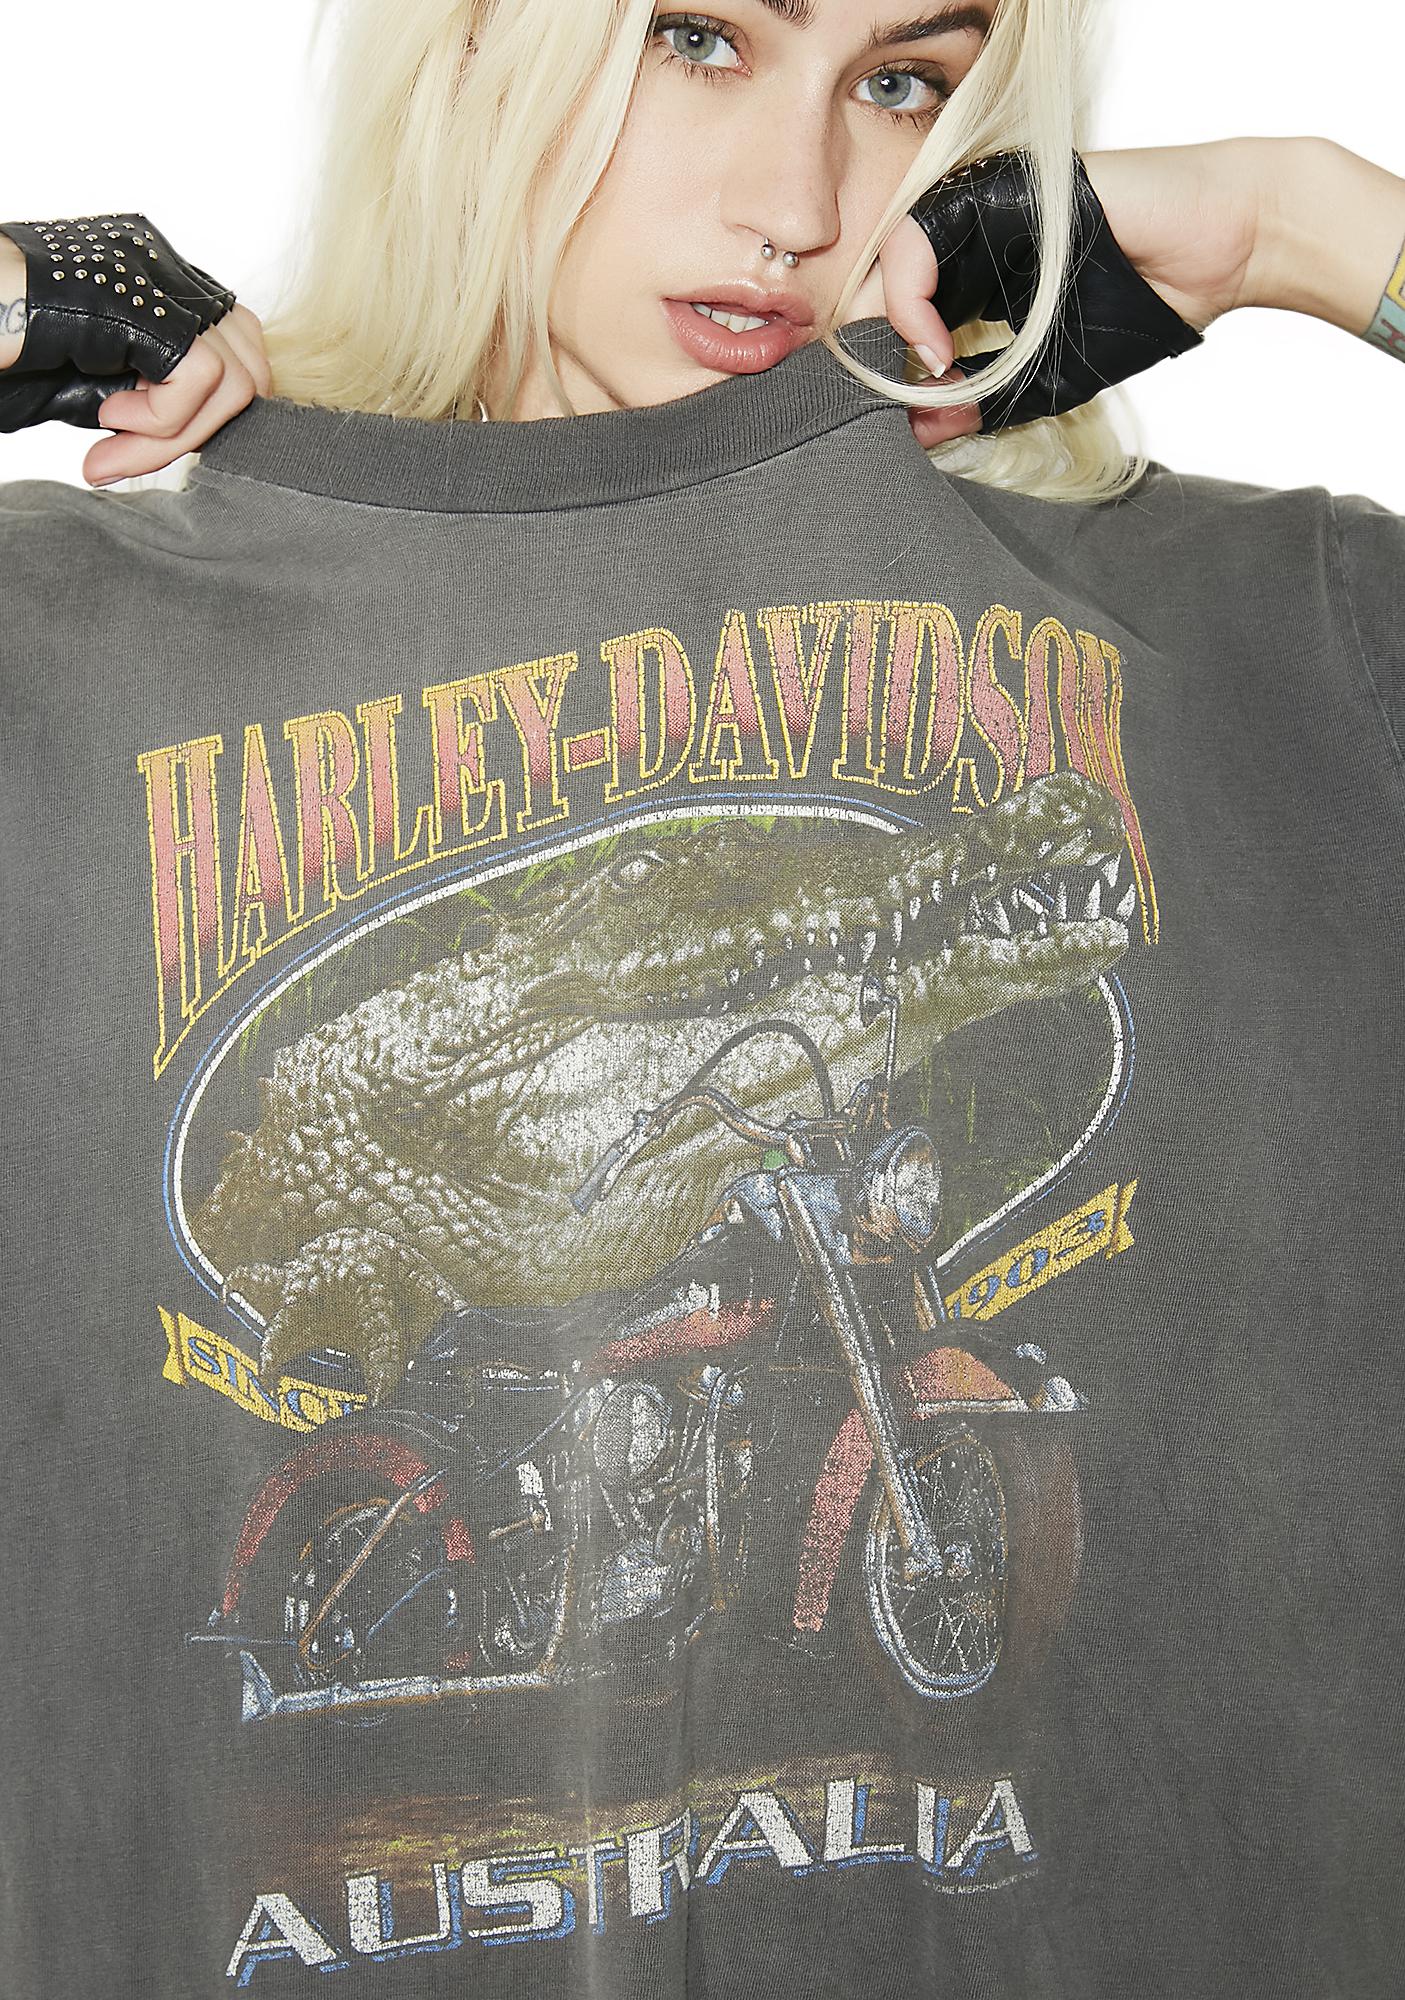 Harley Davidson Oversized Shirt Promotion Off69